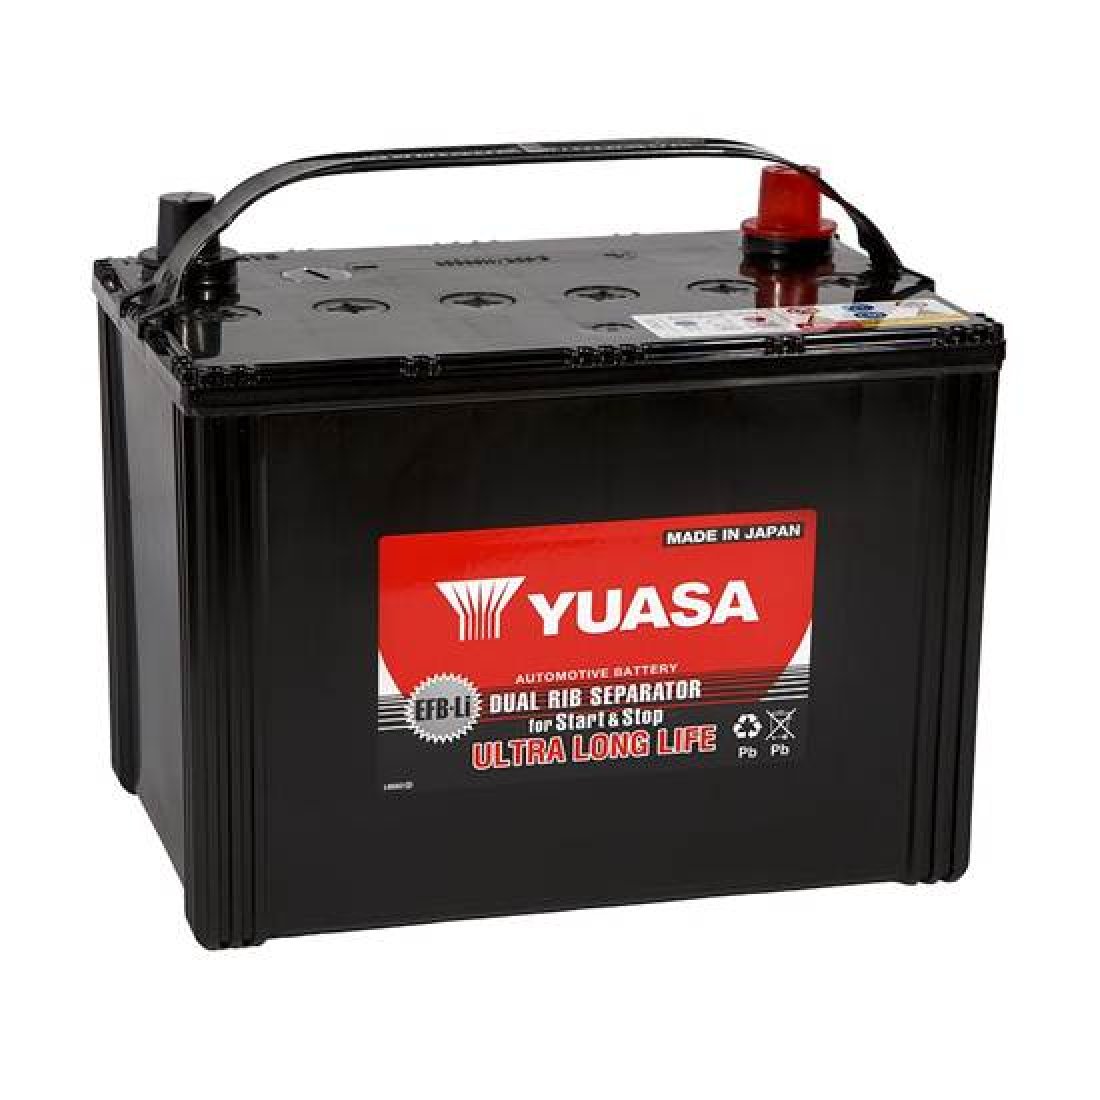 Efb аккумуляторы купить. GS Yuasa 110d26l s95 EFB. X-treme Arctic Red 100d26l (80) обр. Автомобильный аккумулятор GS Yuasa. Аккумулятор автомобильный Yuasa made in Turkey.